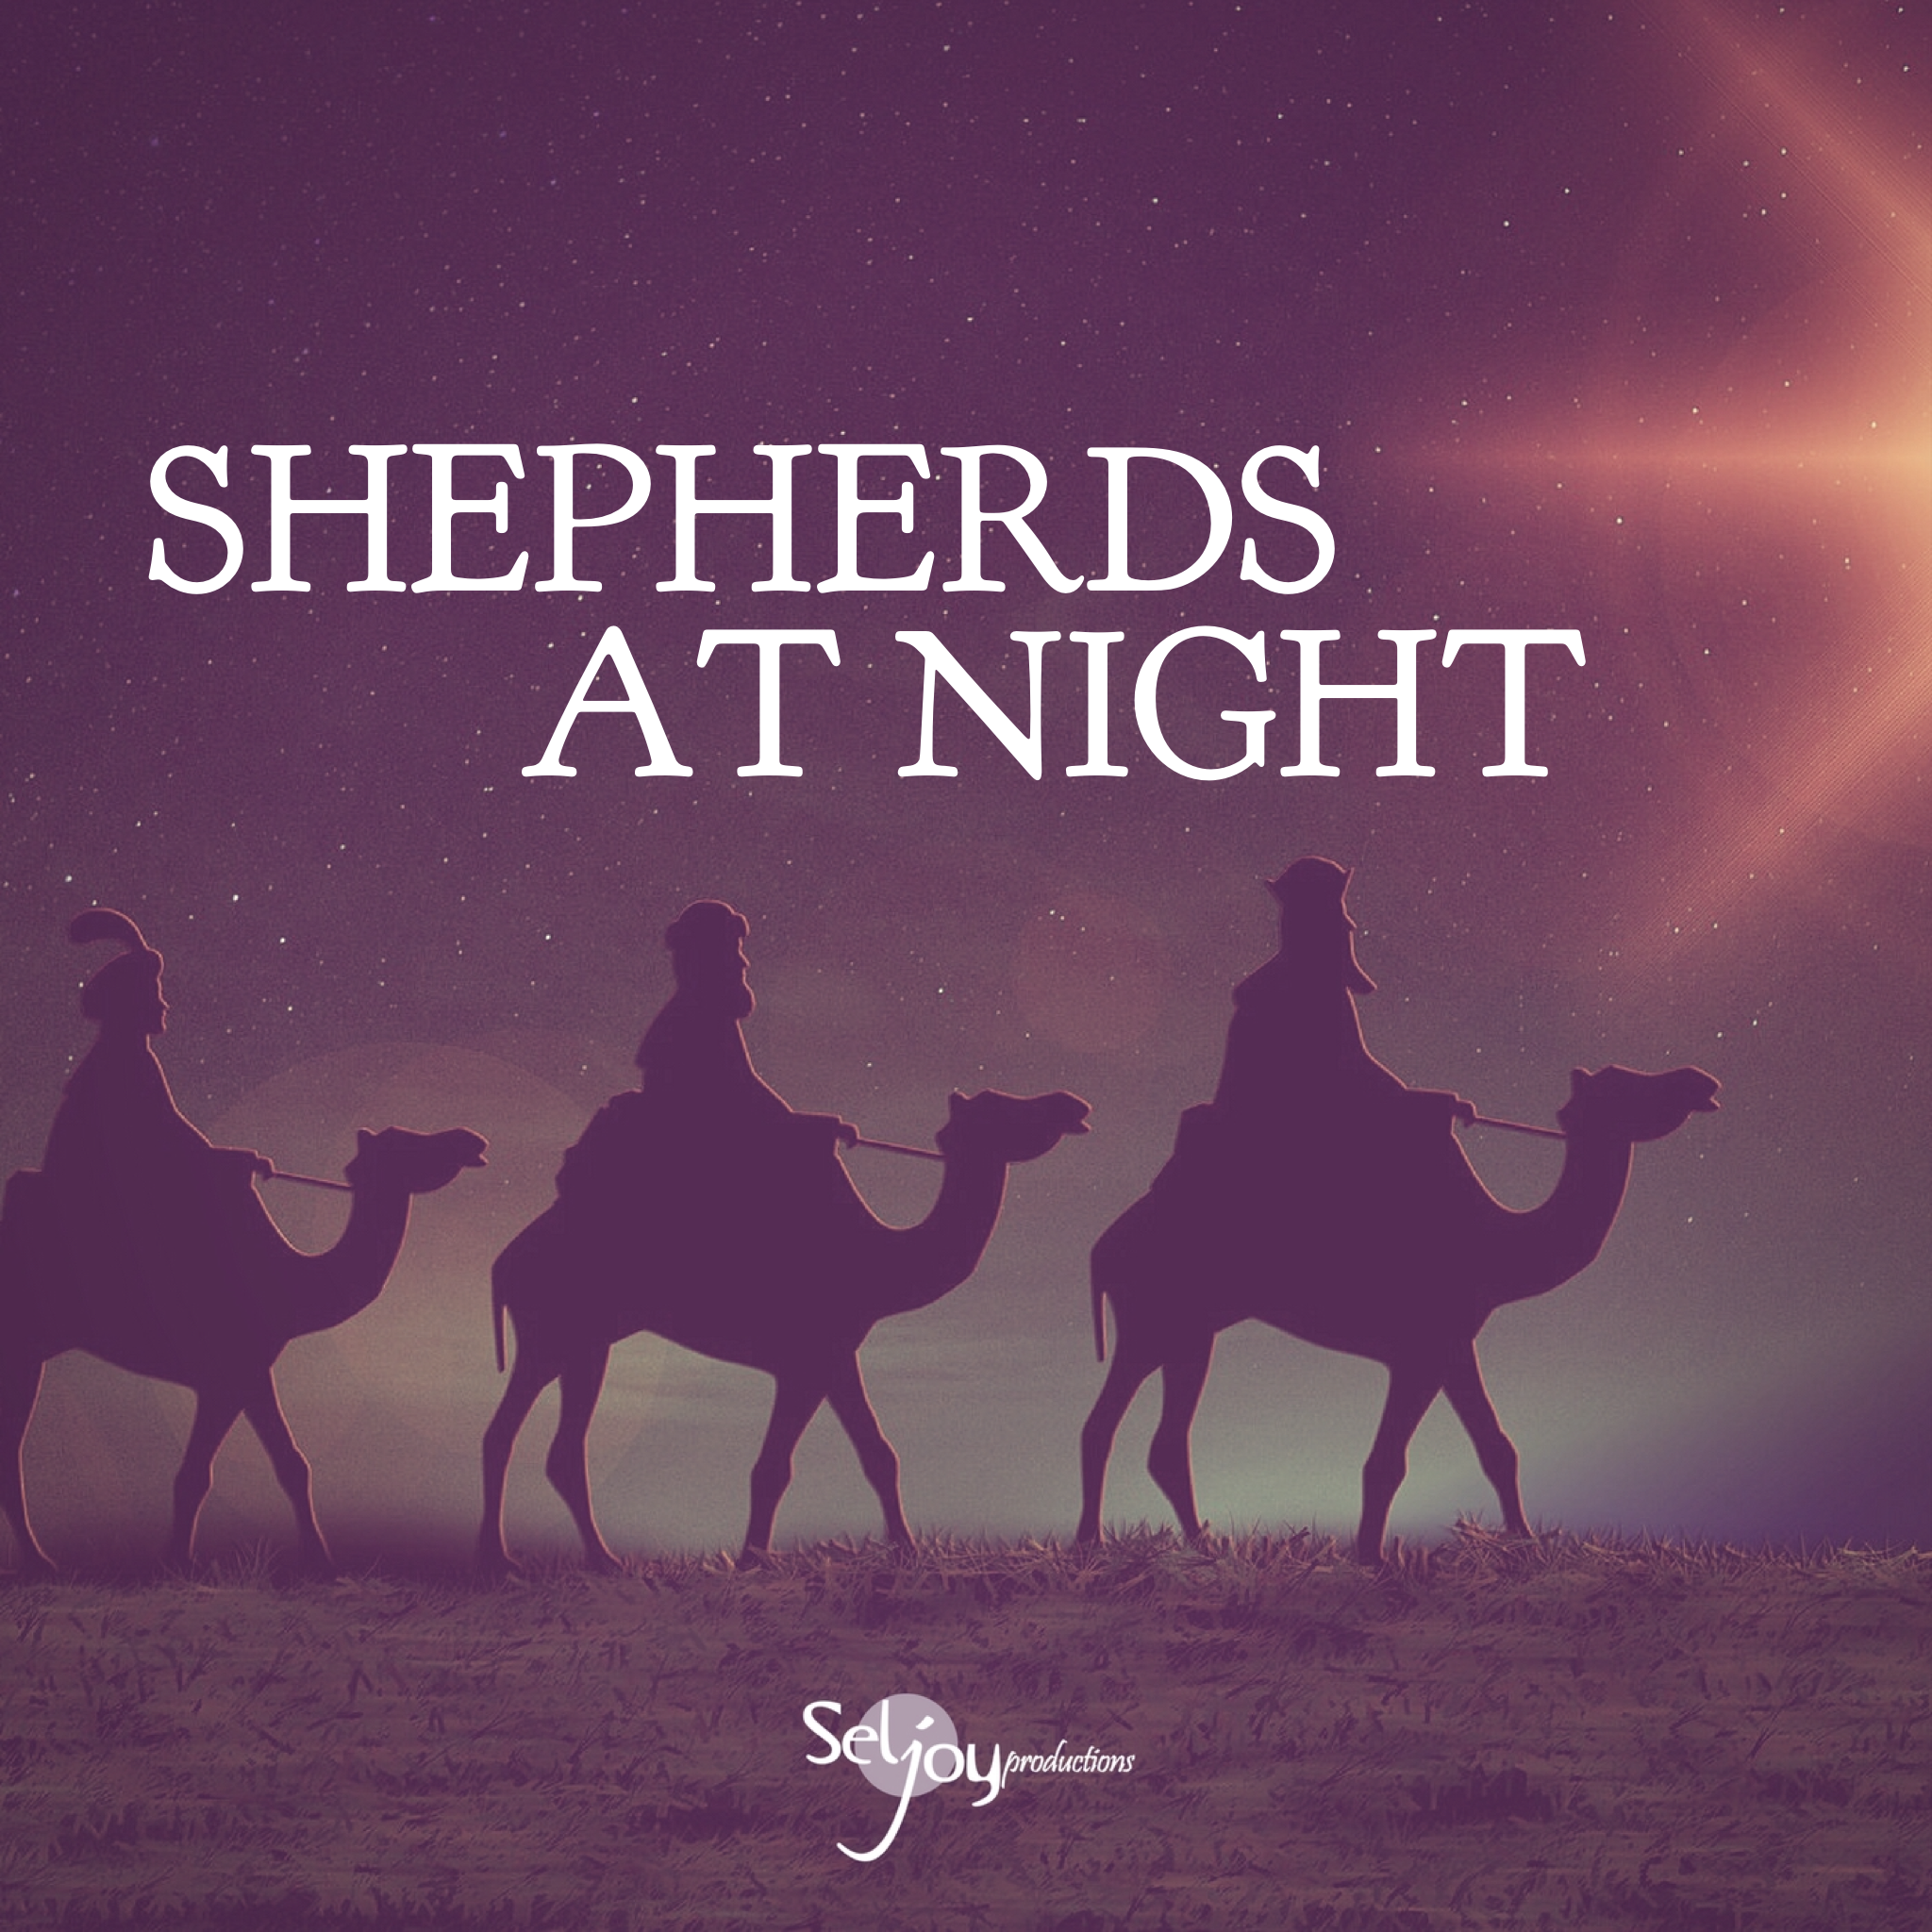 Shepherds at Night